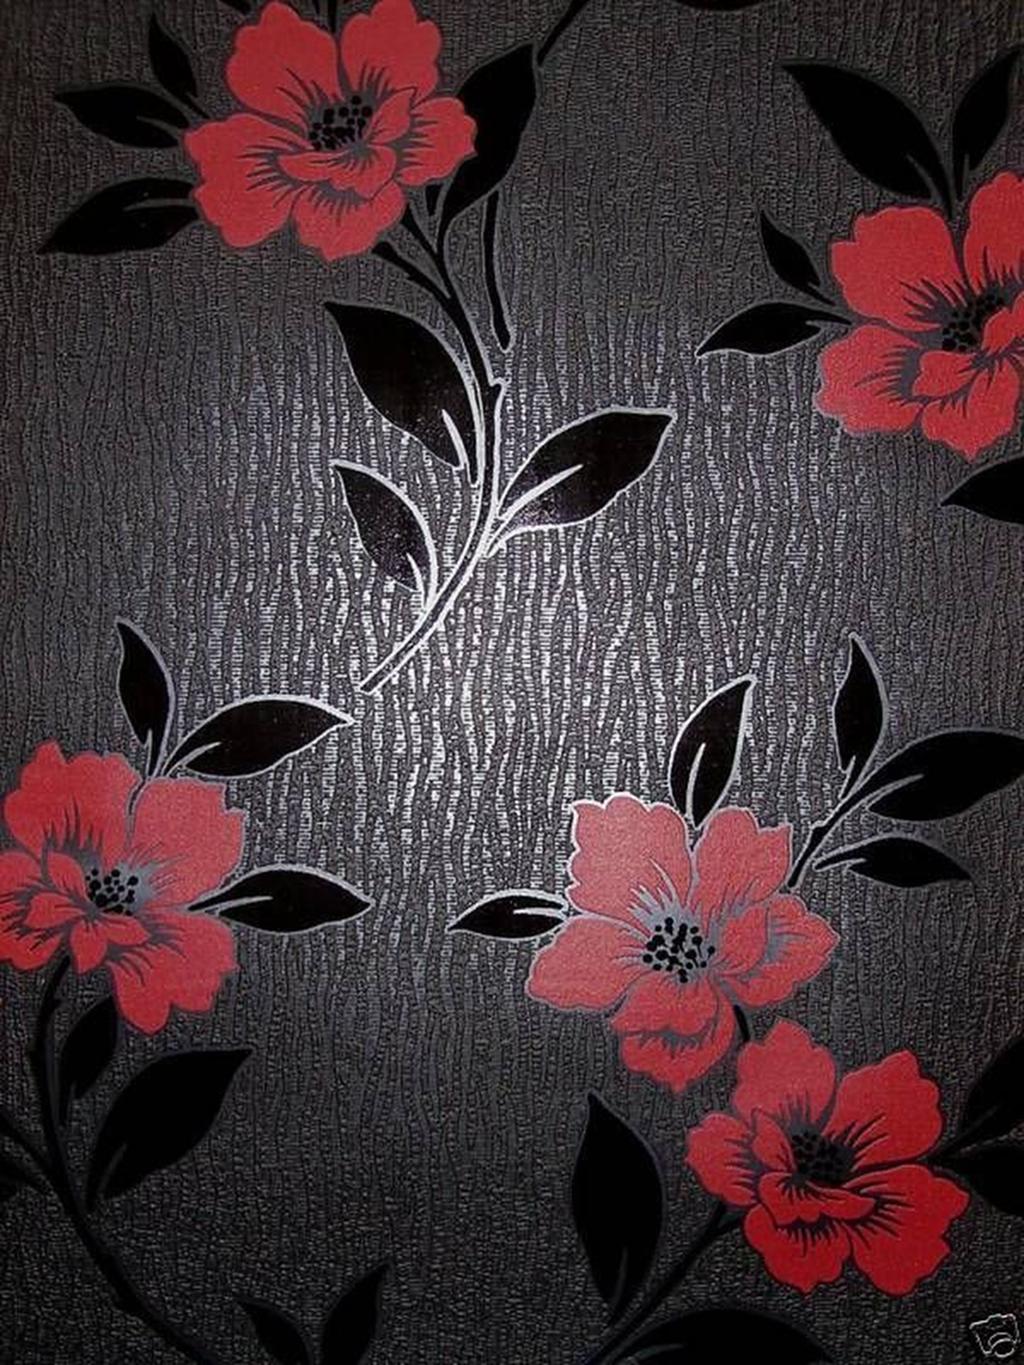 Designer Feature Wall Textured Vinyl Wallpaper Black - Black Wallpaper With Red Flowers - HD Wallpaper 